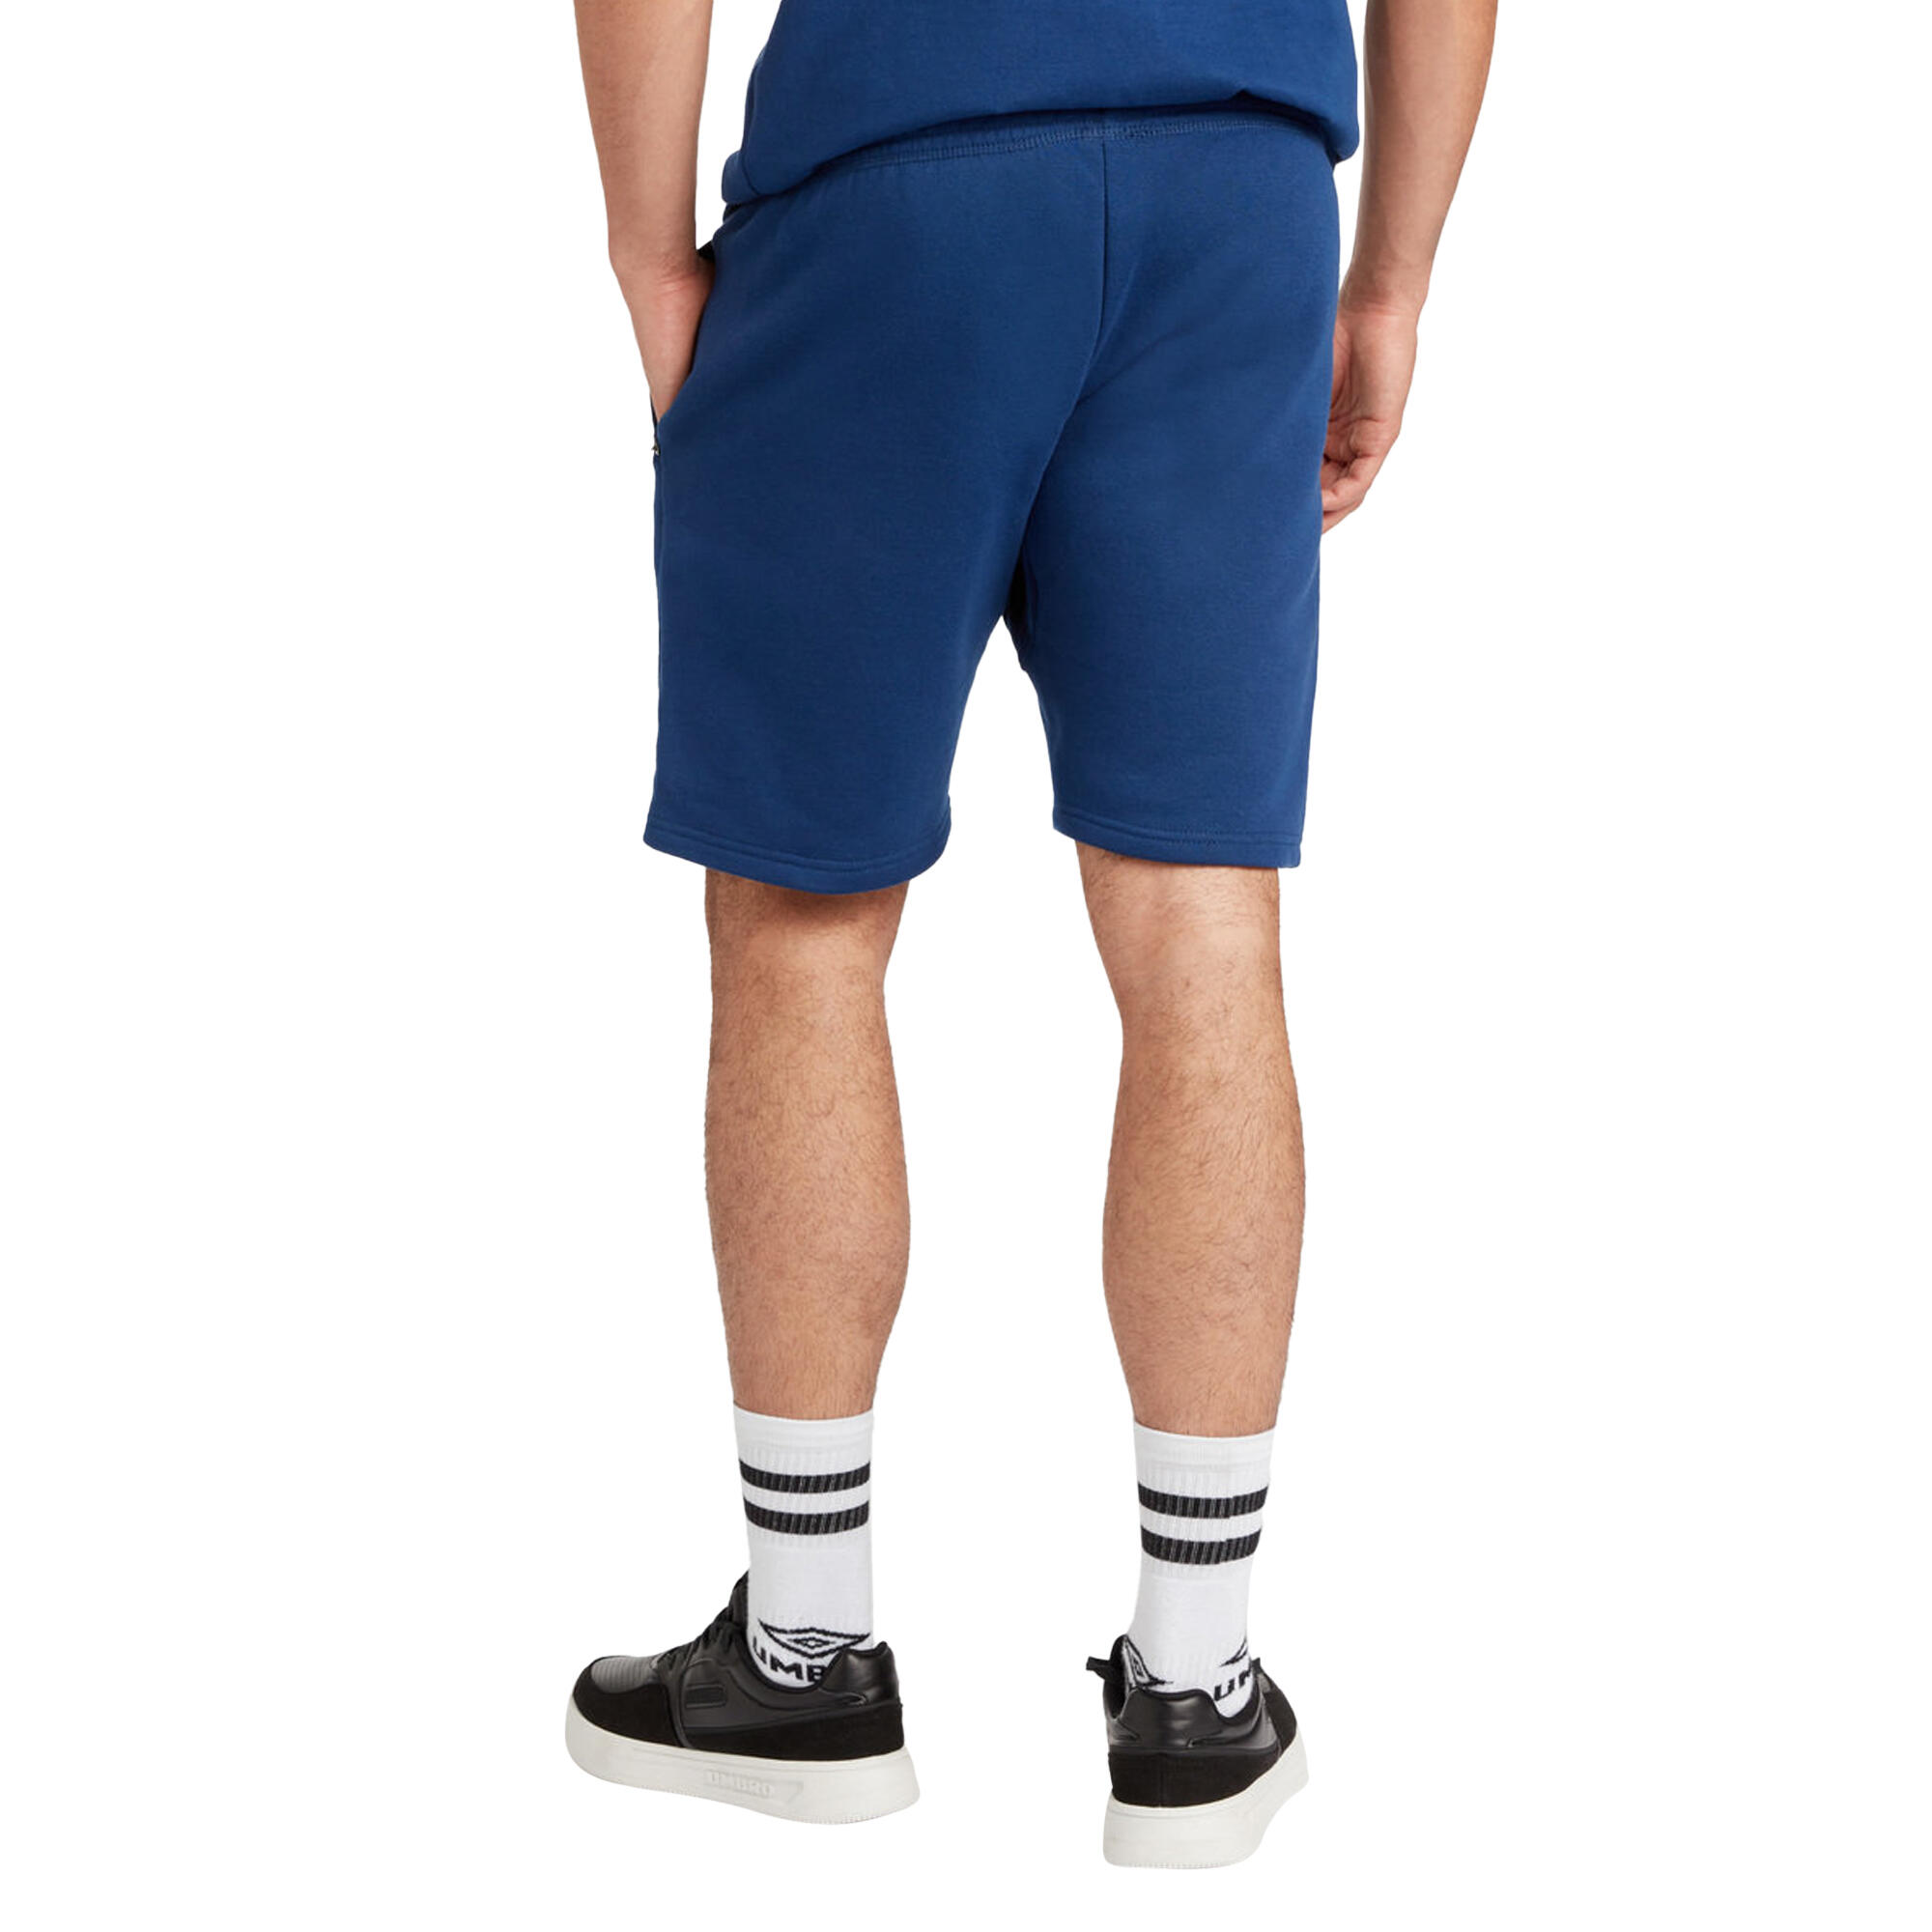 Mens Club Leisure Shorts (Navy Blue/White) 4/4